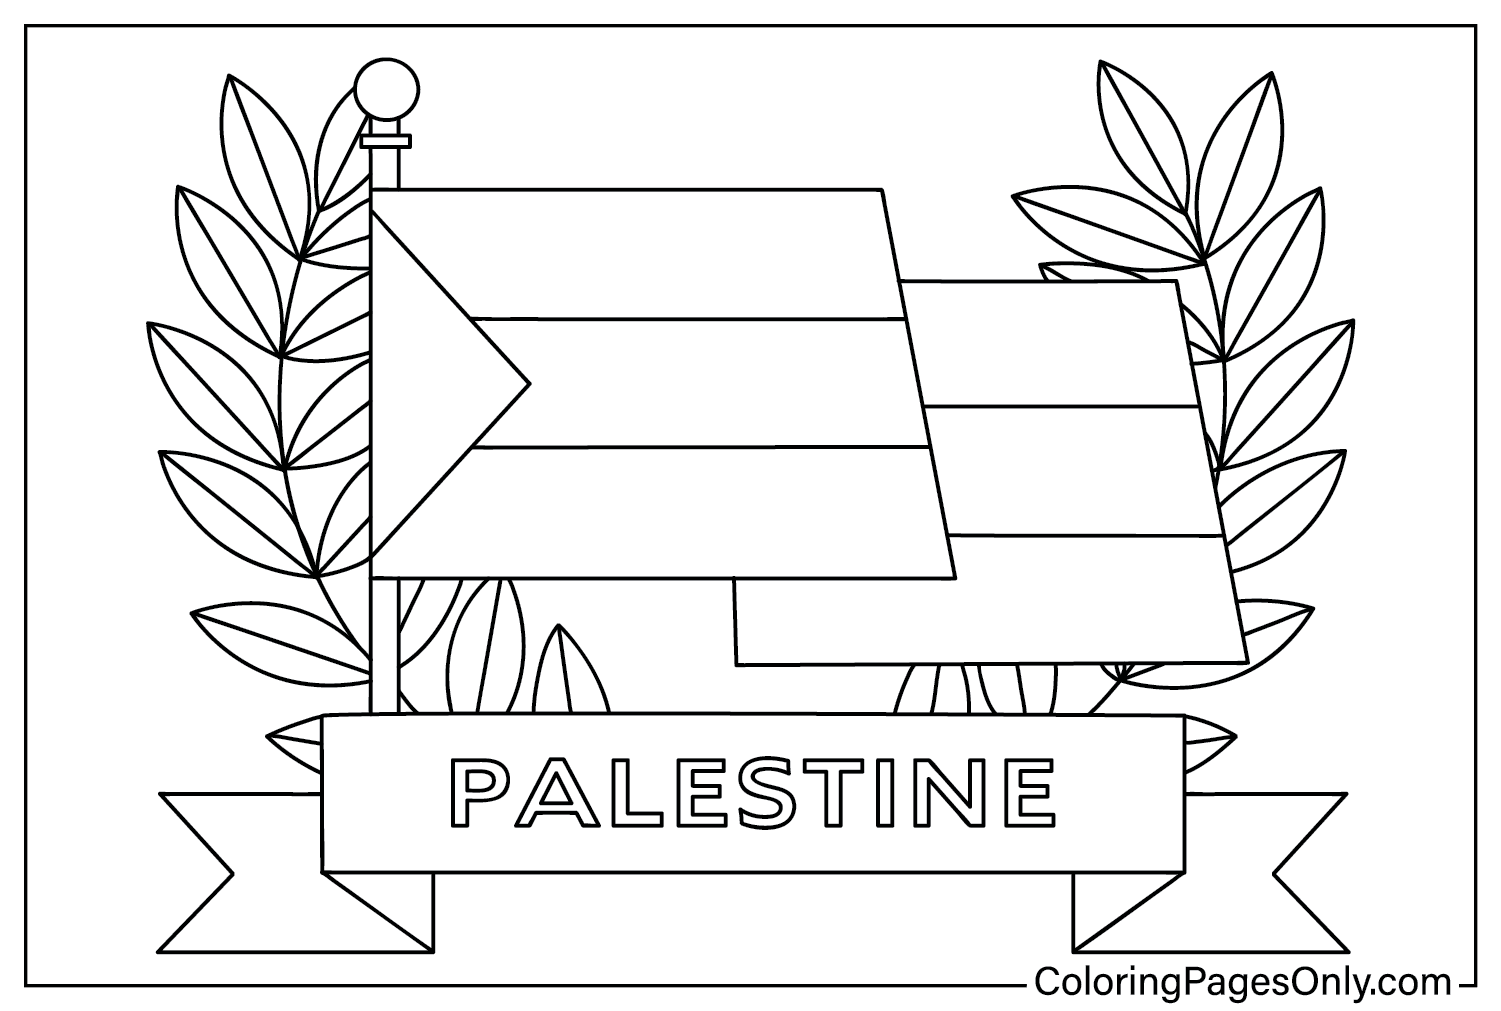 Dibujo para colorear Palestina